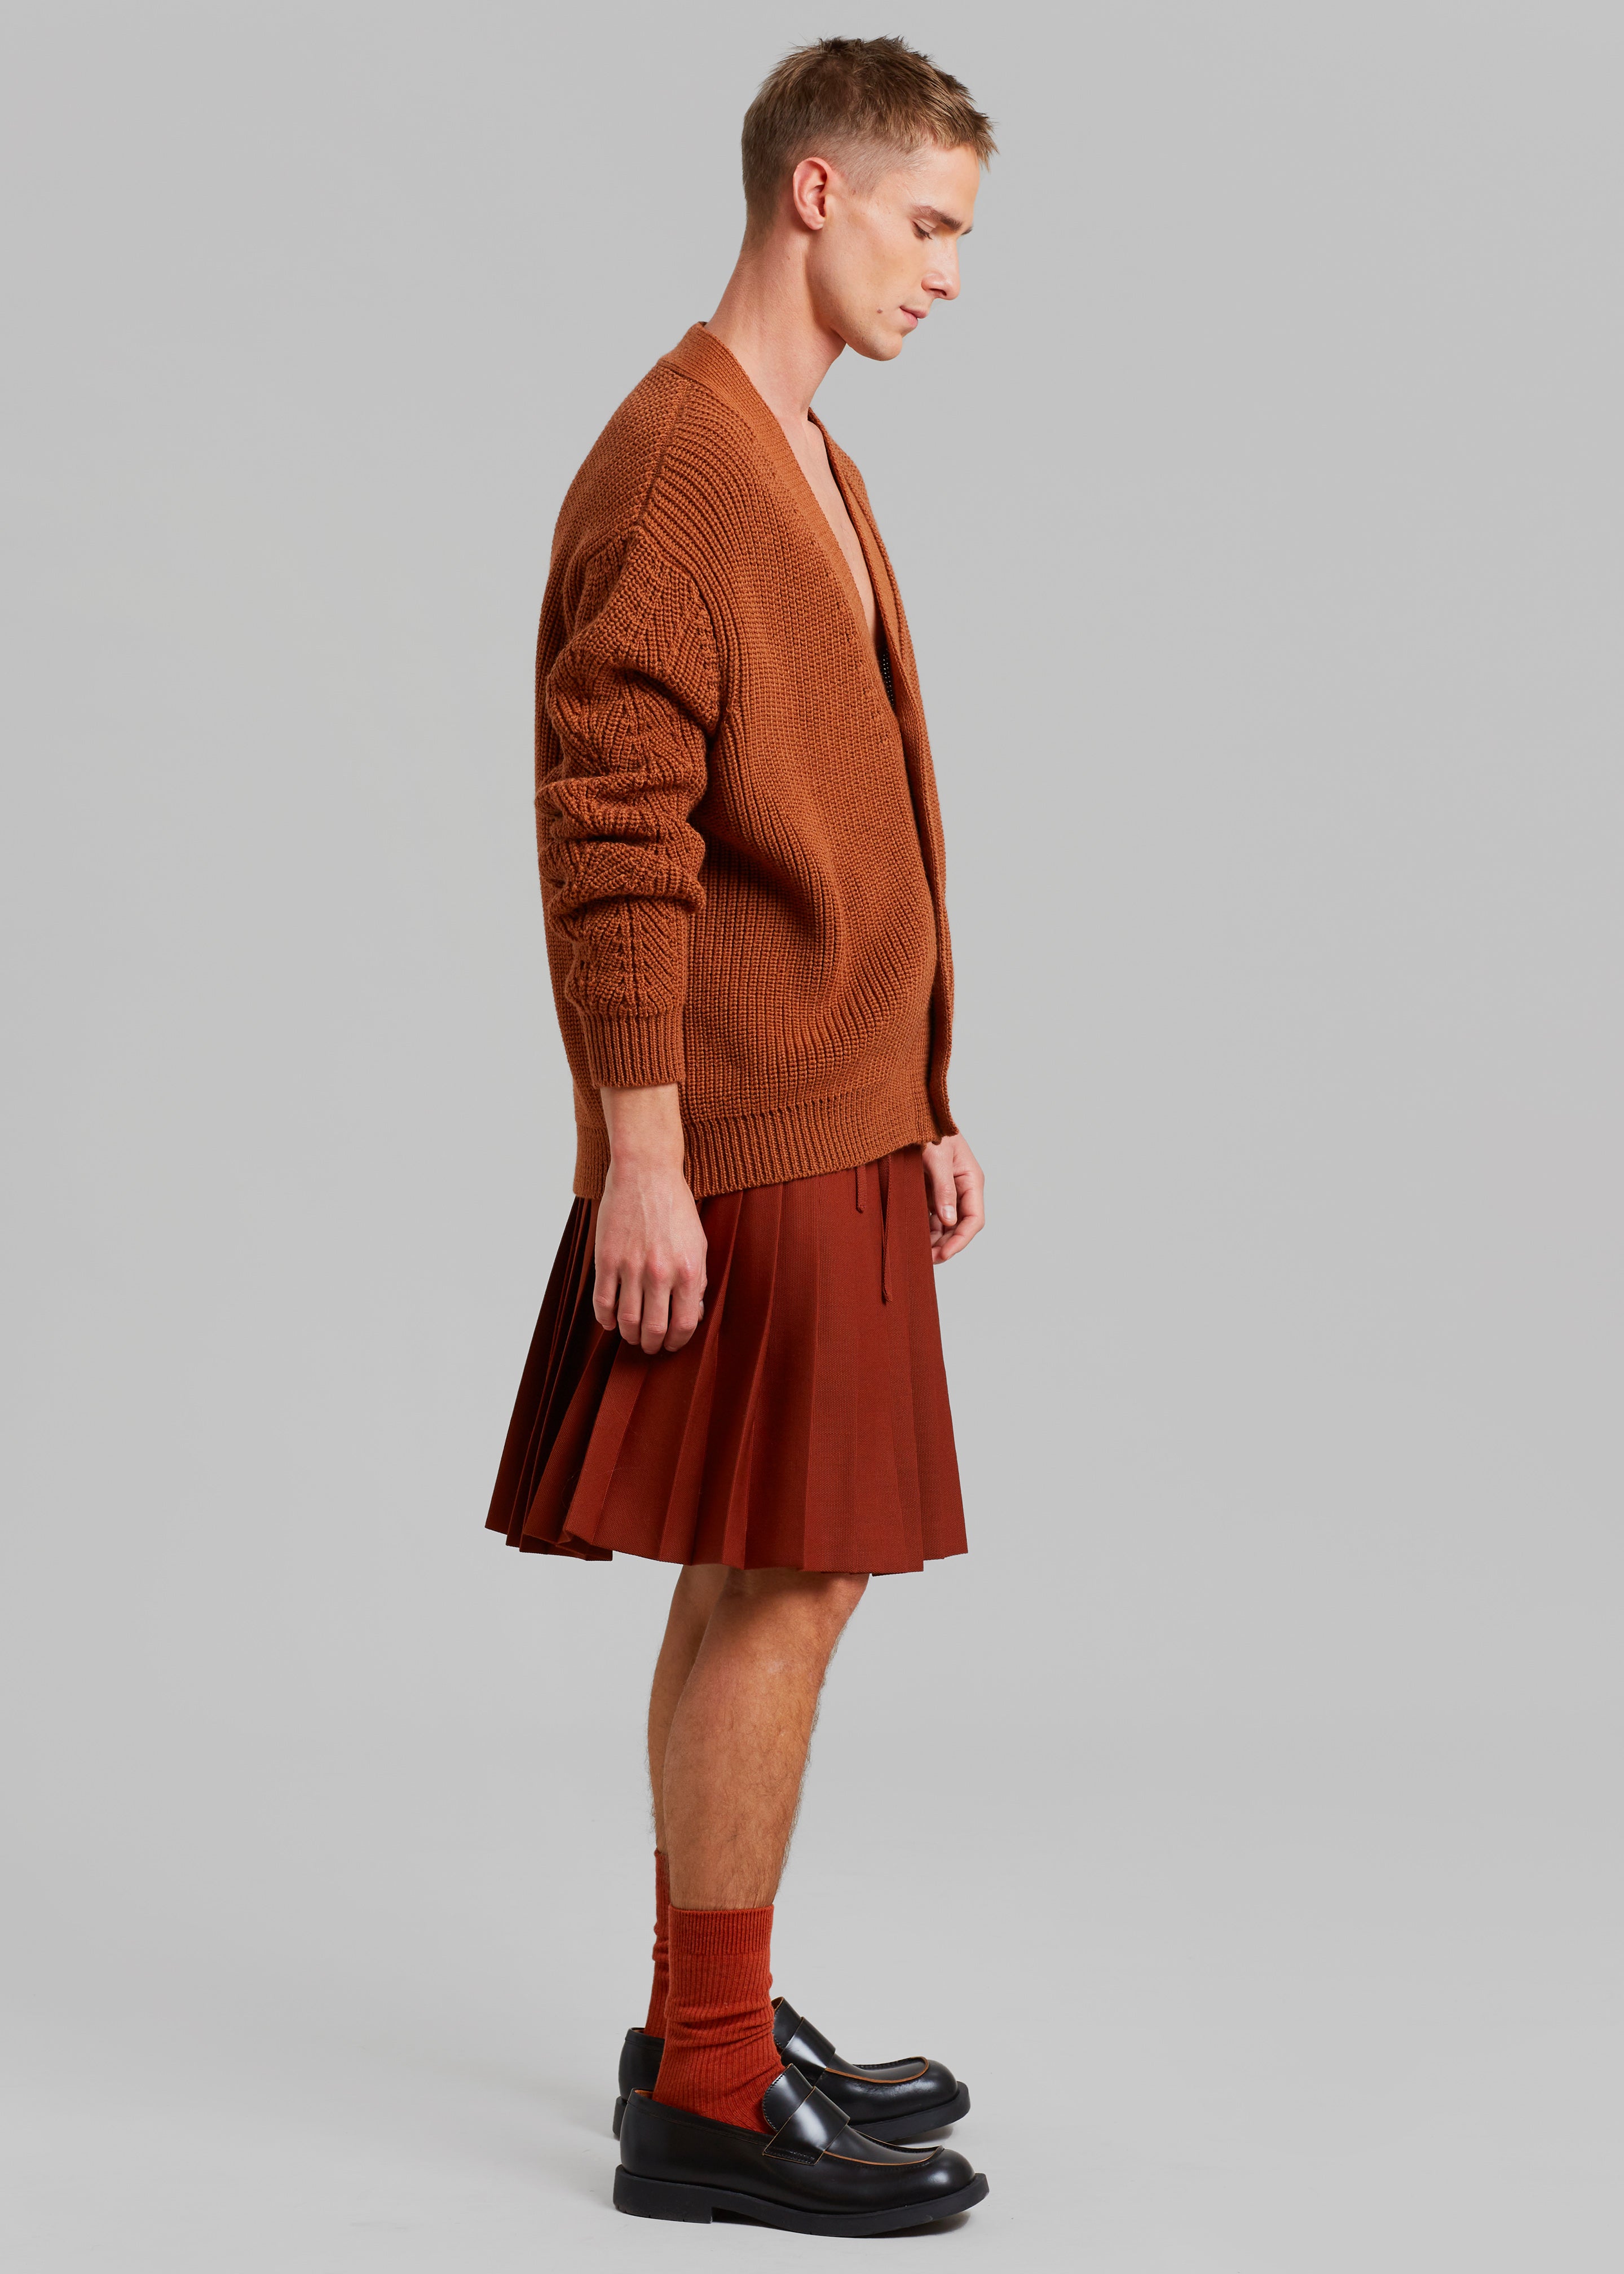 EGONLab Euphoria Skirt - Rust Wool - 5